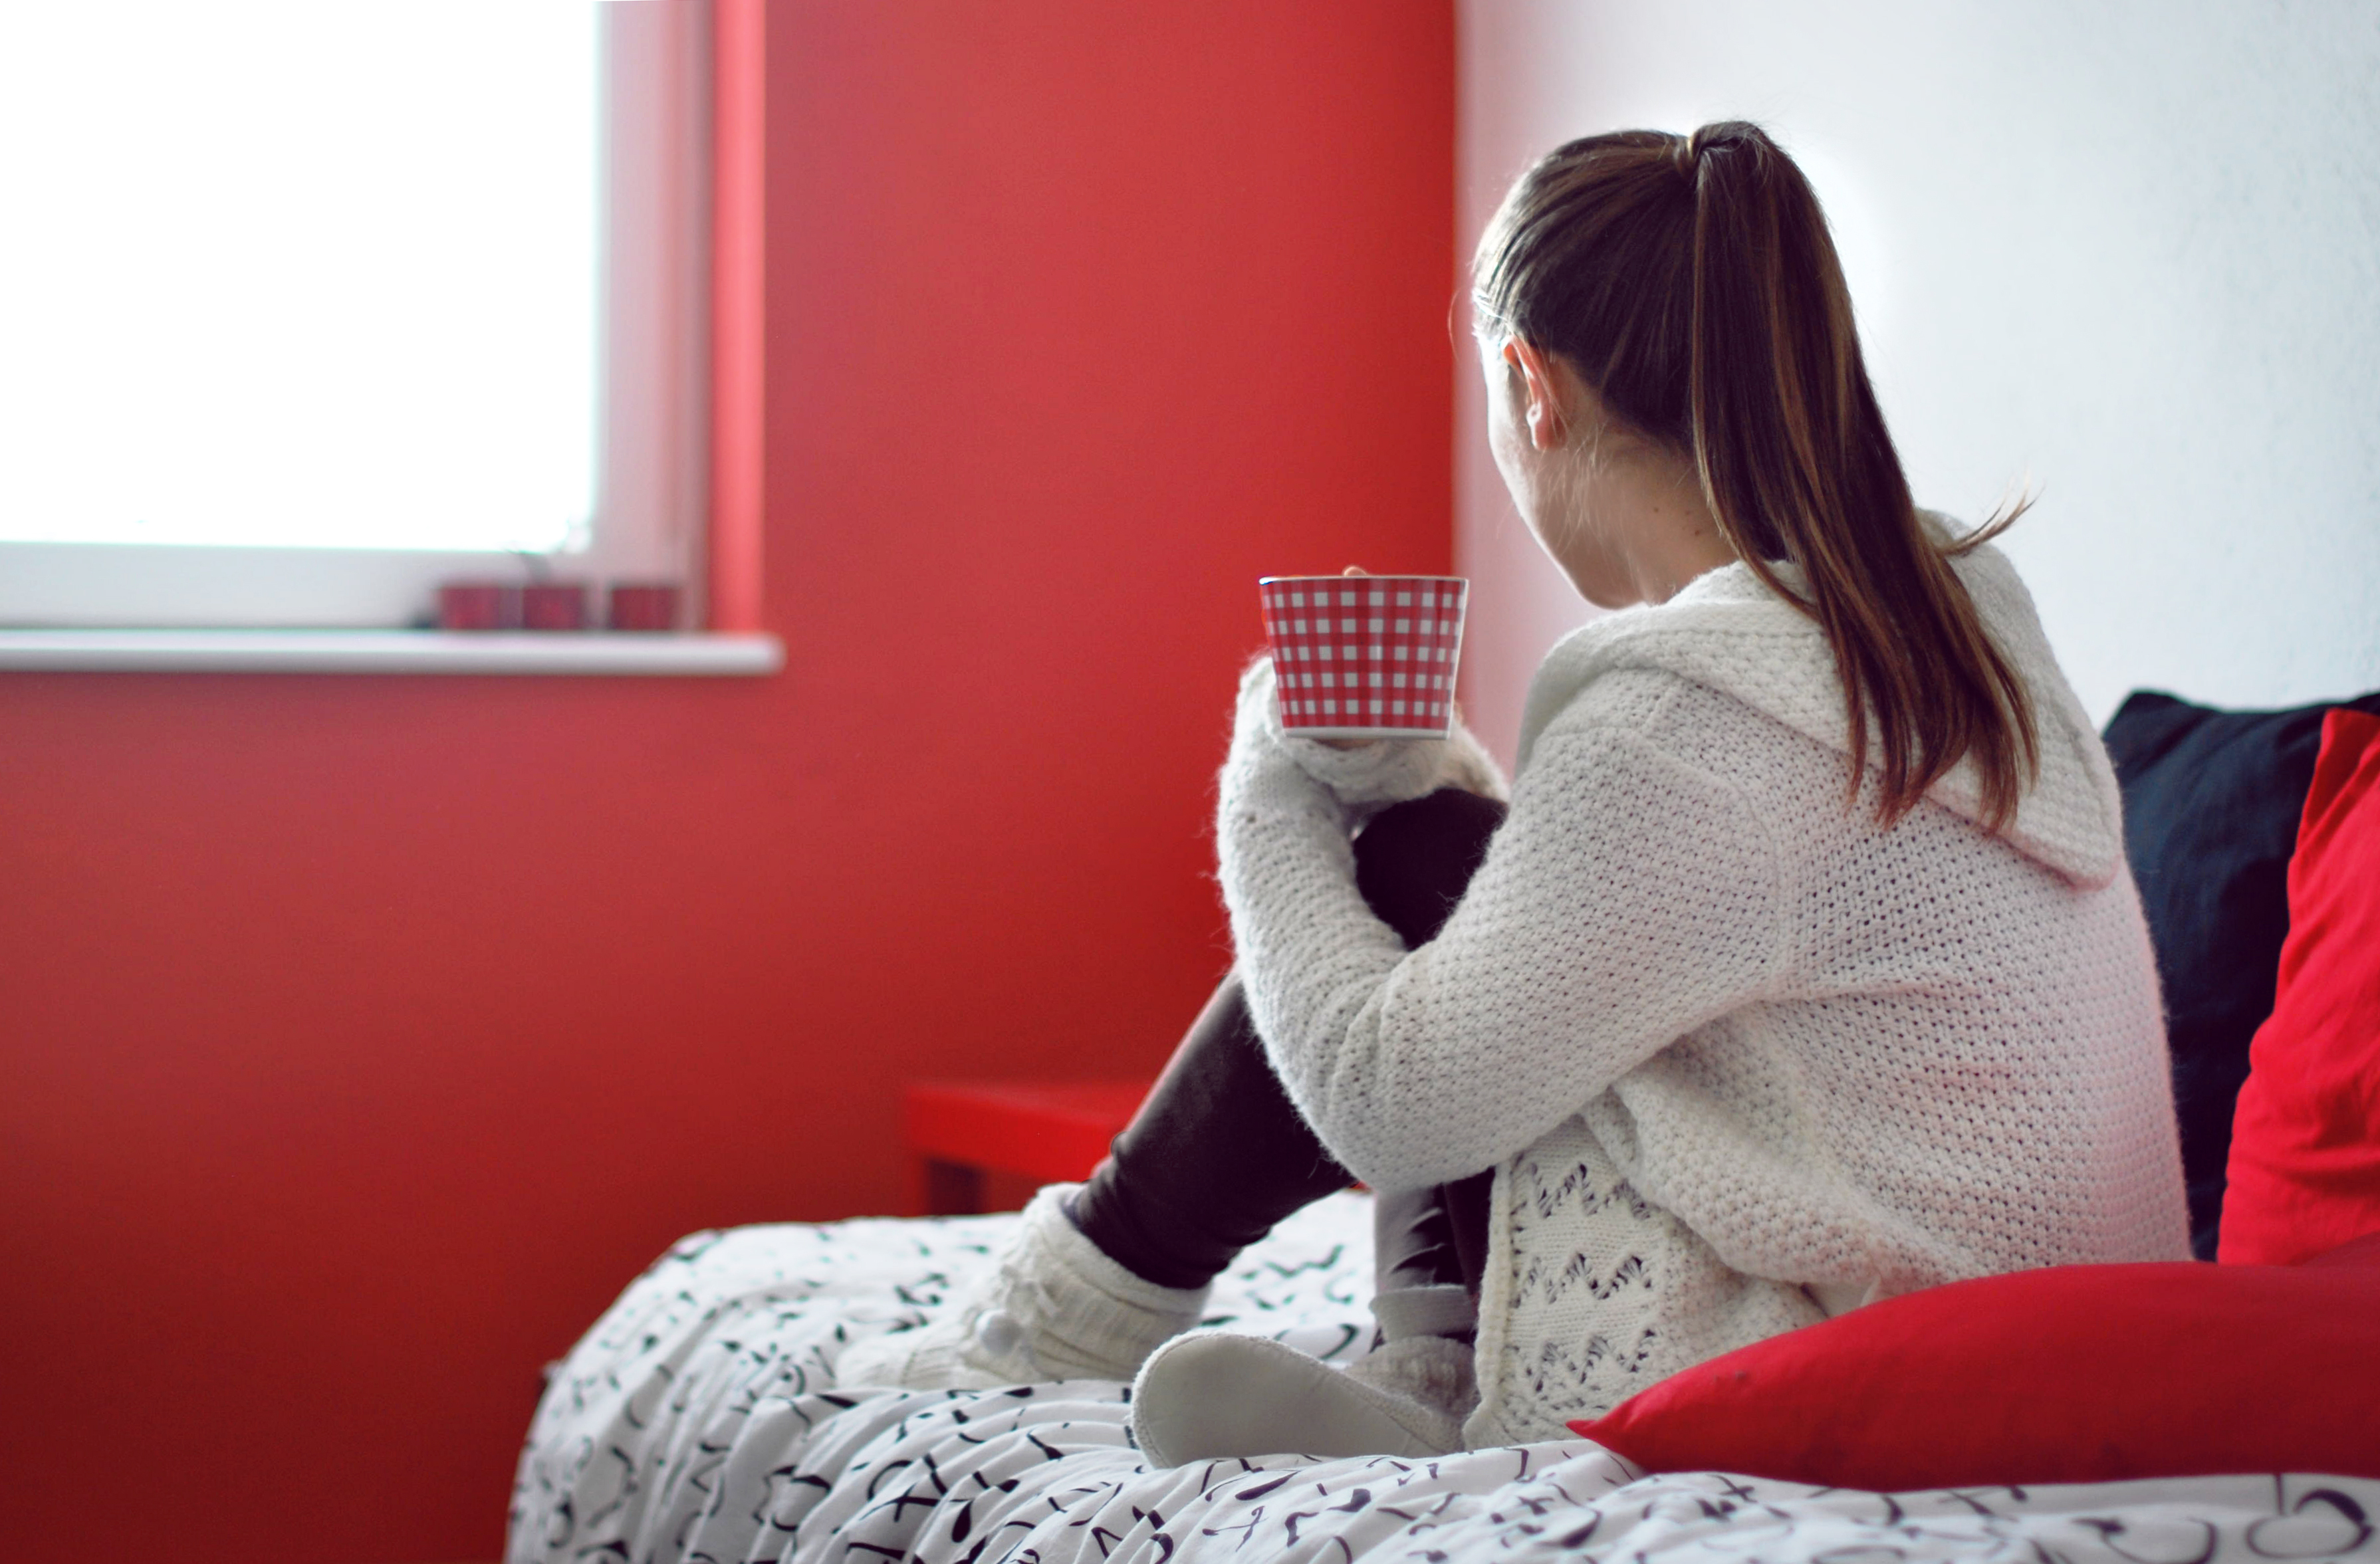 Image: Girl, shirt, sitting, mug, back, sofa, pillows, red